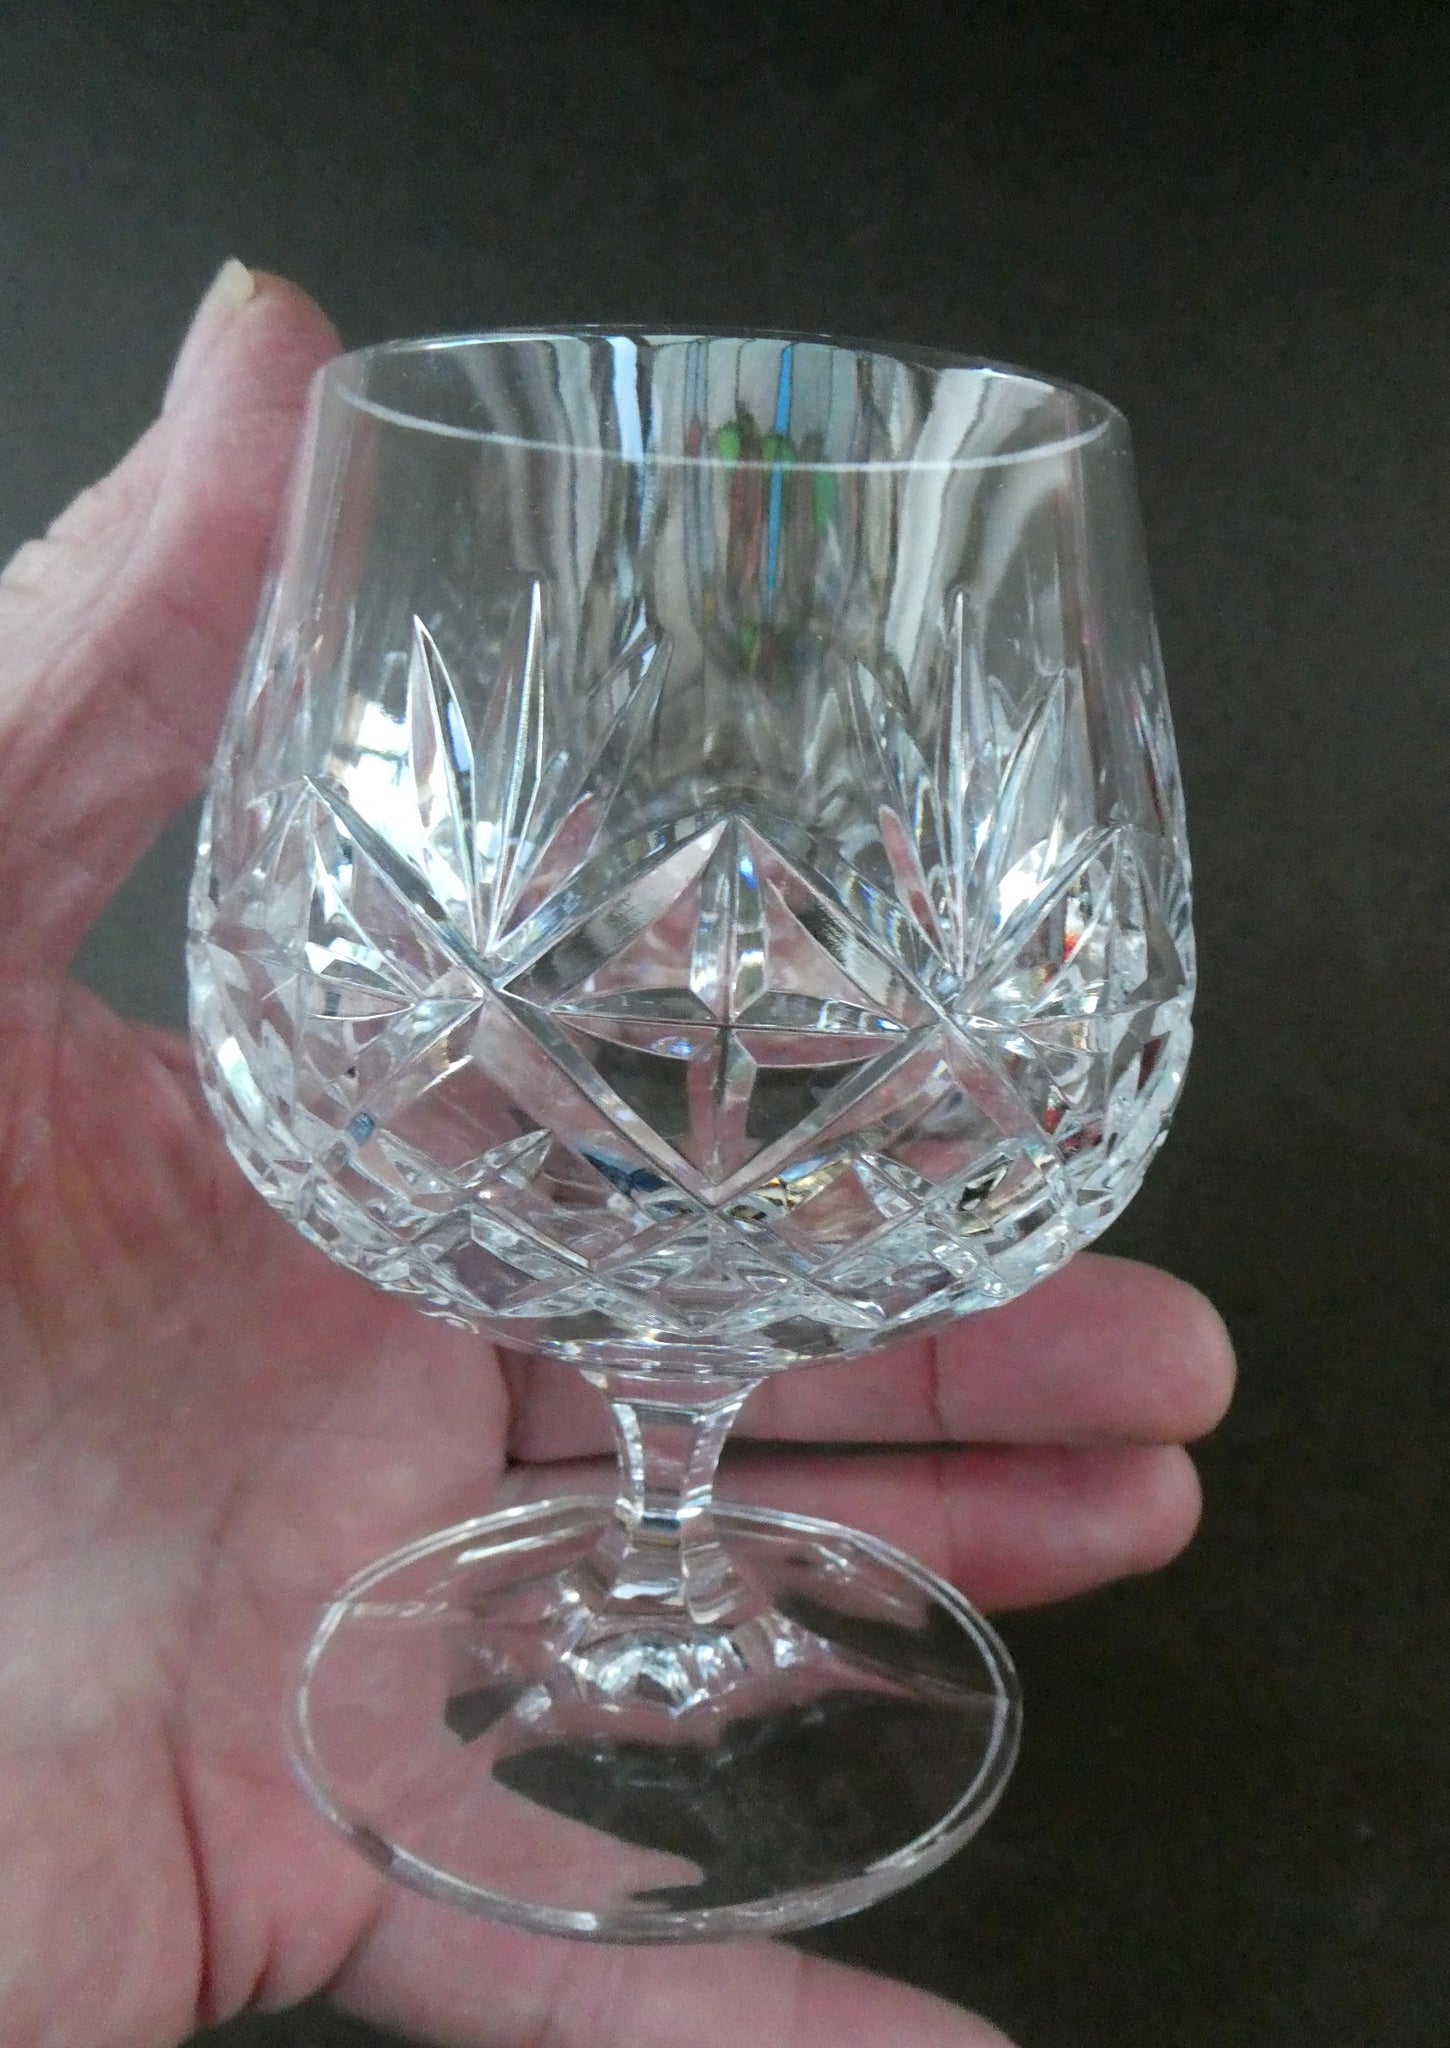 Set of SIX Matching Cut Crystal Brandy Glasses. Height 4 1/4